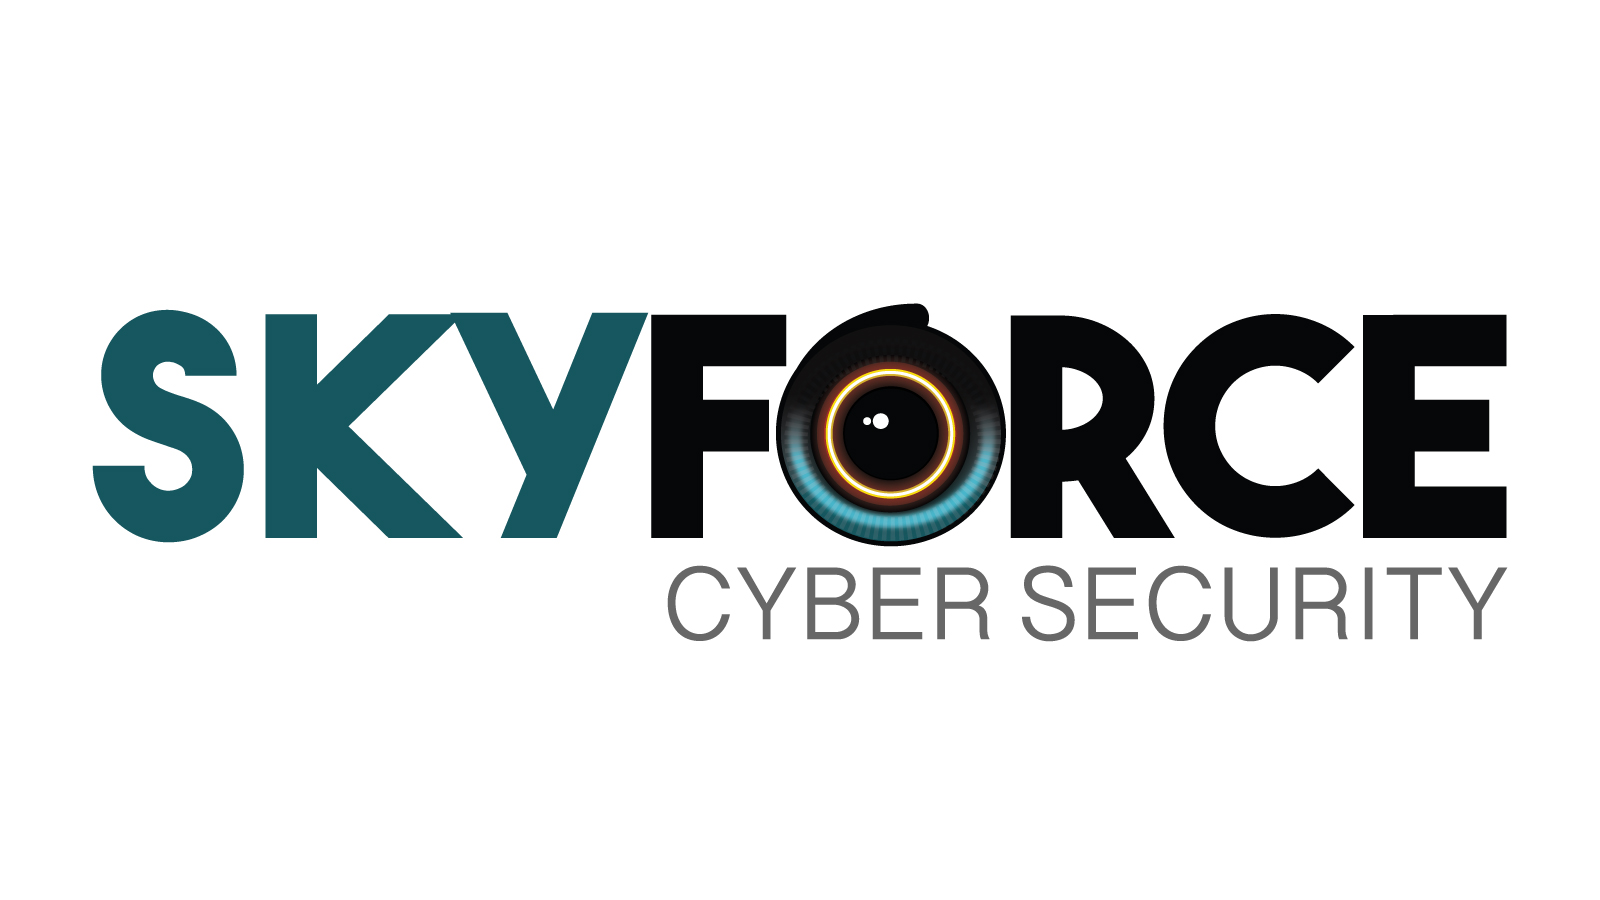 SKYFORCE Cyber Security